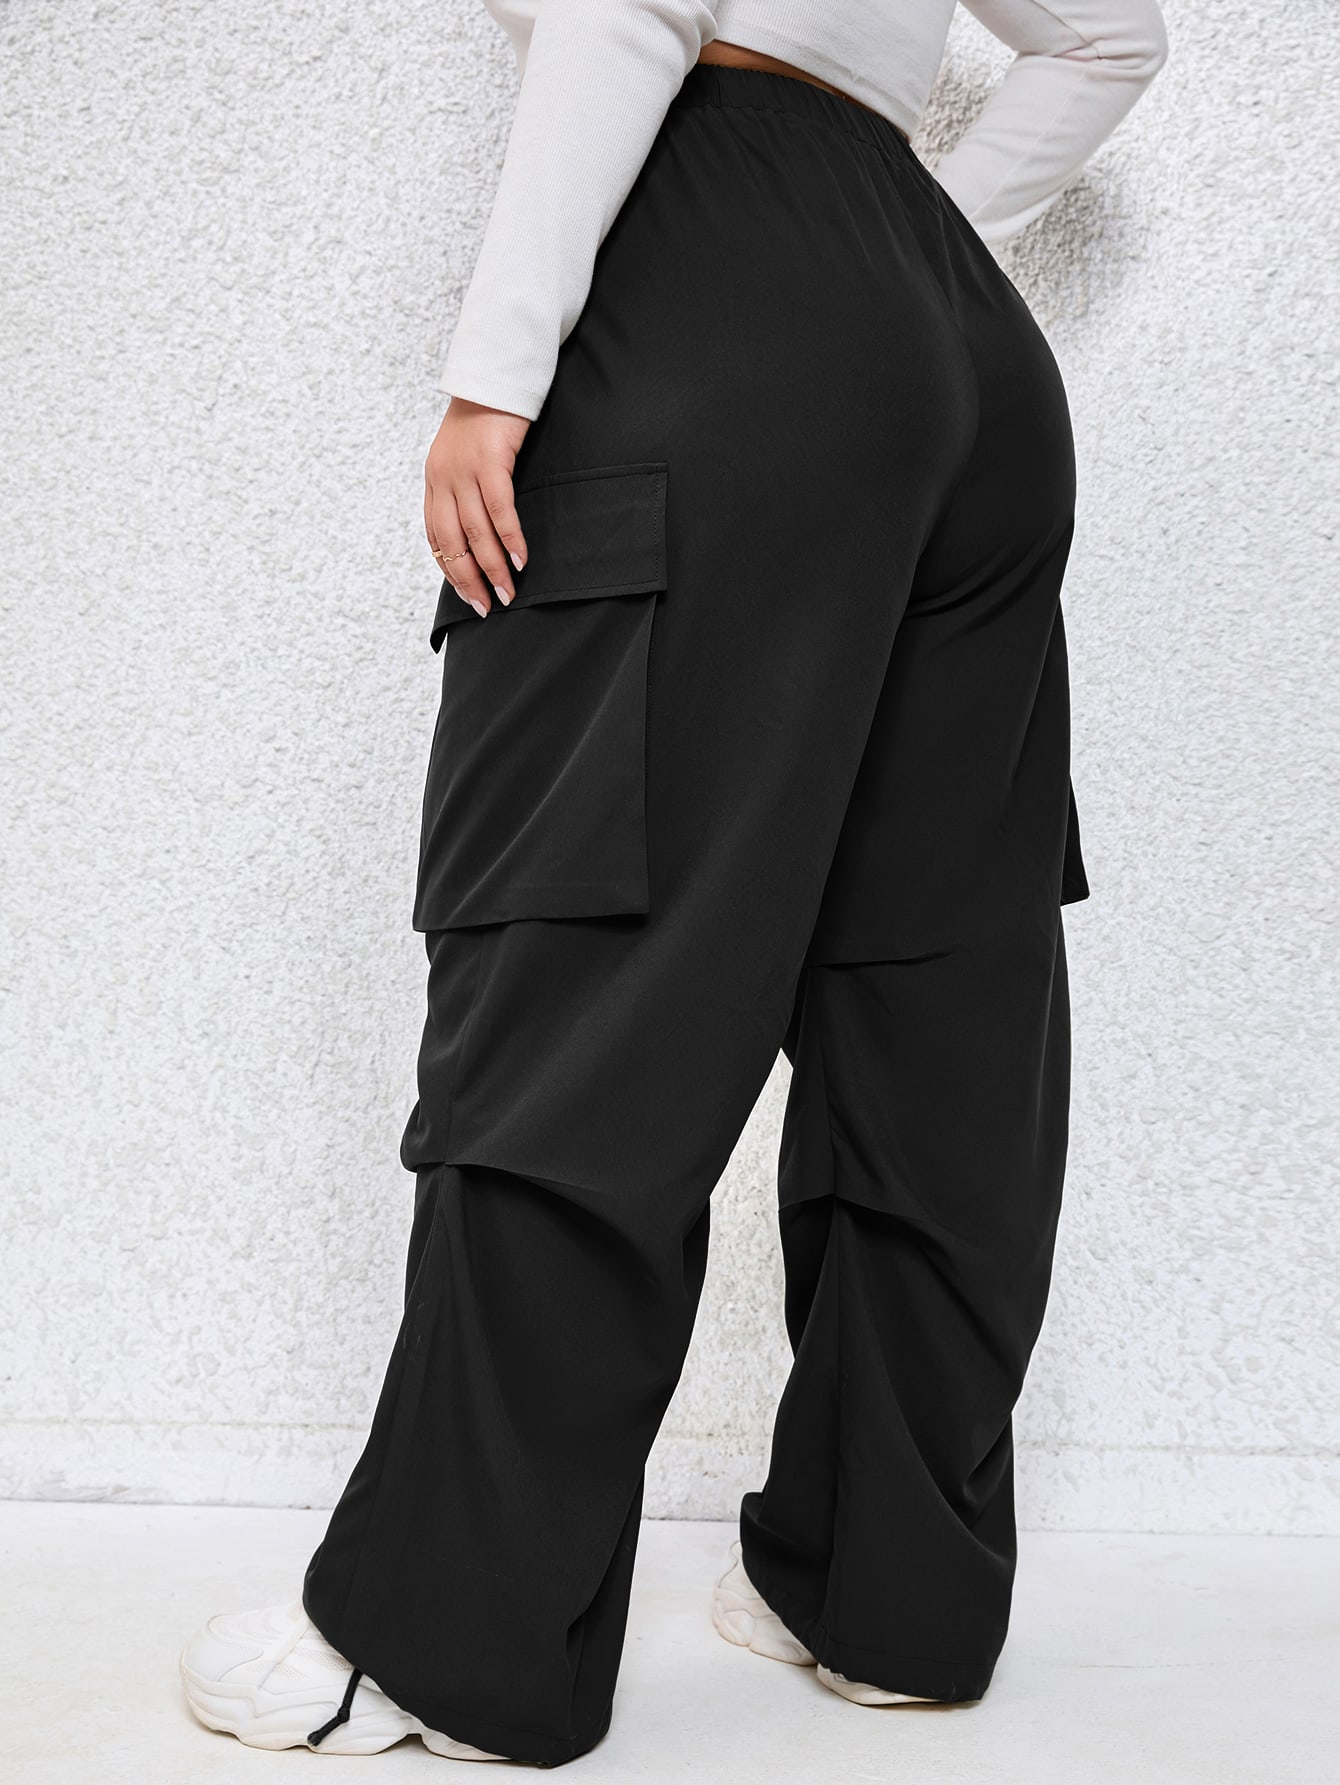 Cargo Trousers  Black  women  493 products  FASHIOLAin